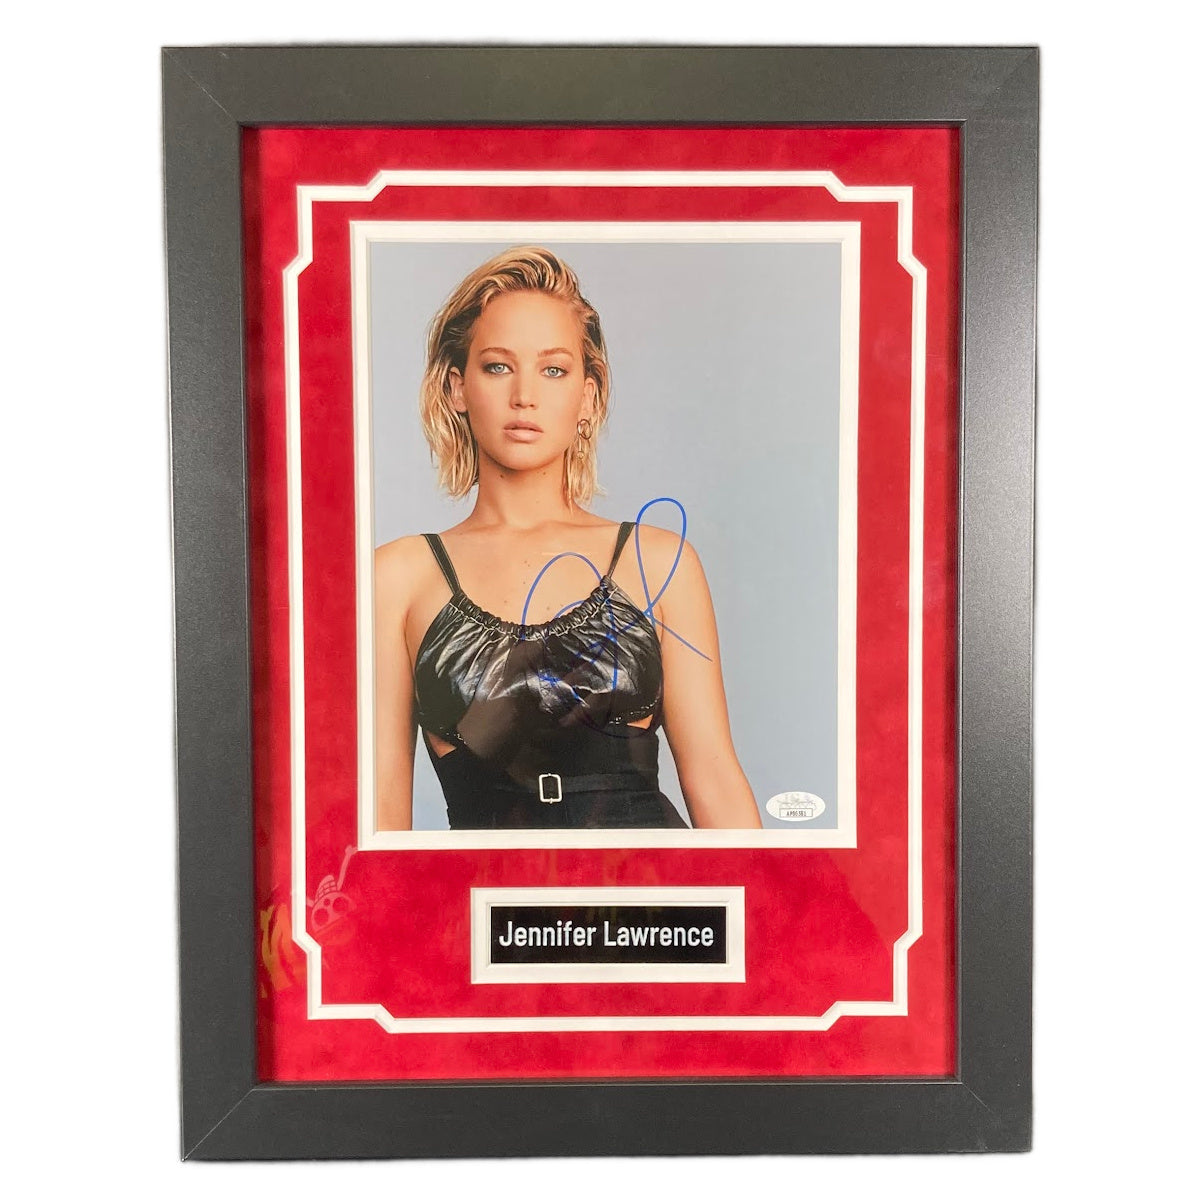 Jennifer Lawrence Signed 8x10 Photo Custom Framed The Hunger Games Autographed JSA COA